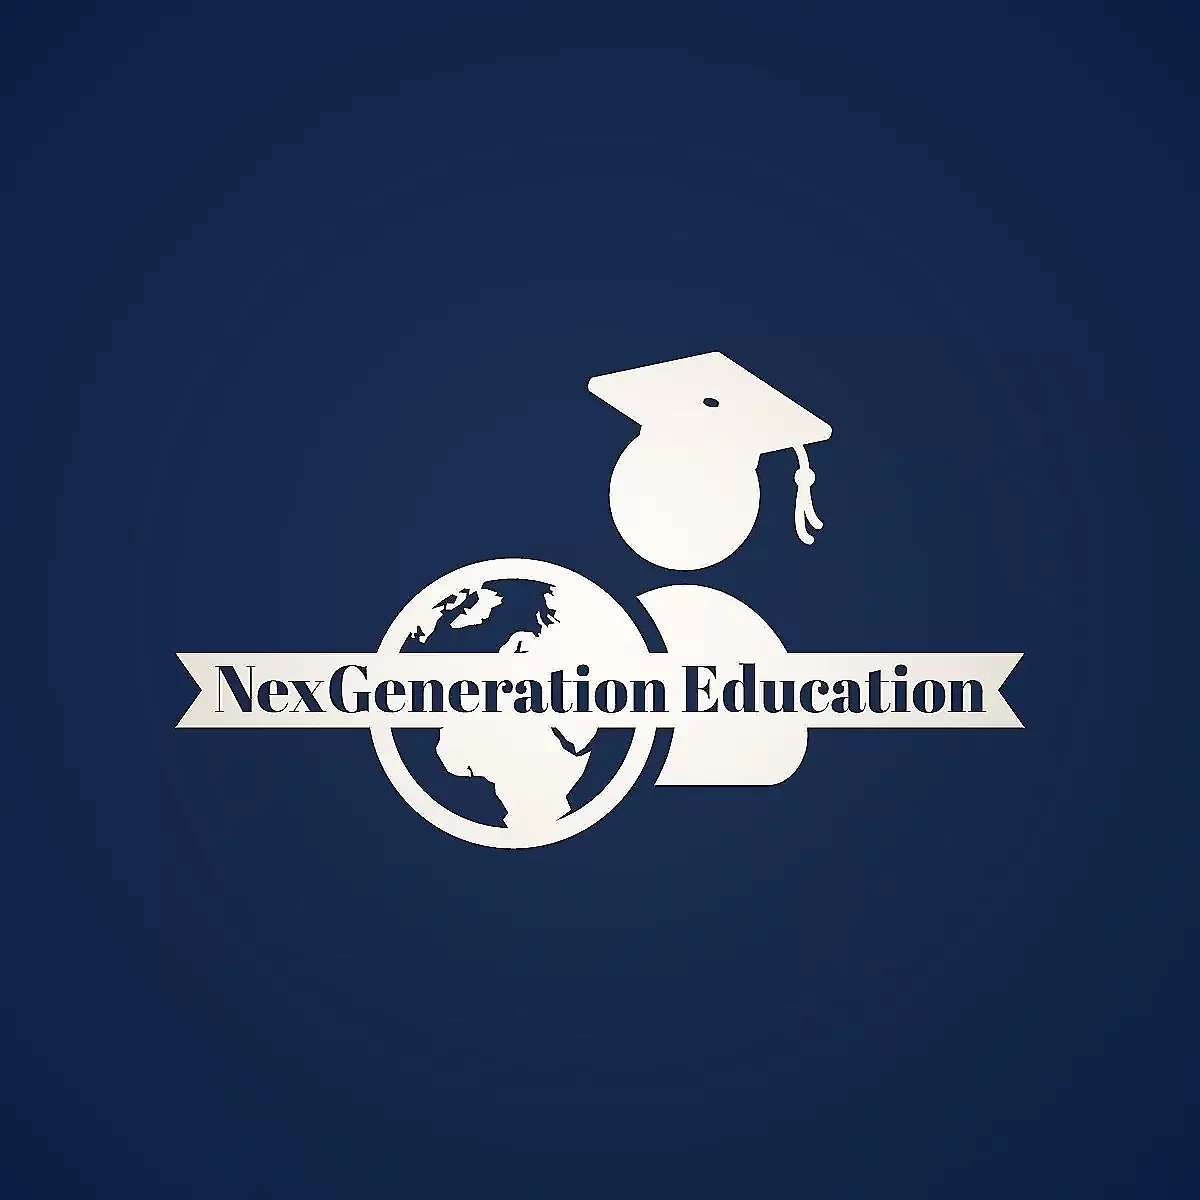 NexGeneration Education